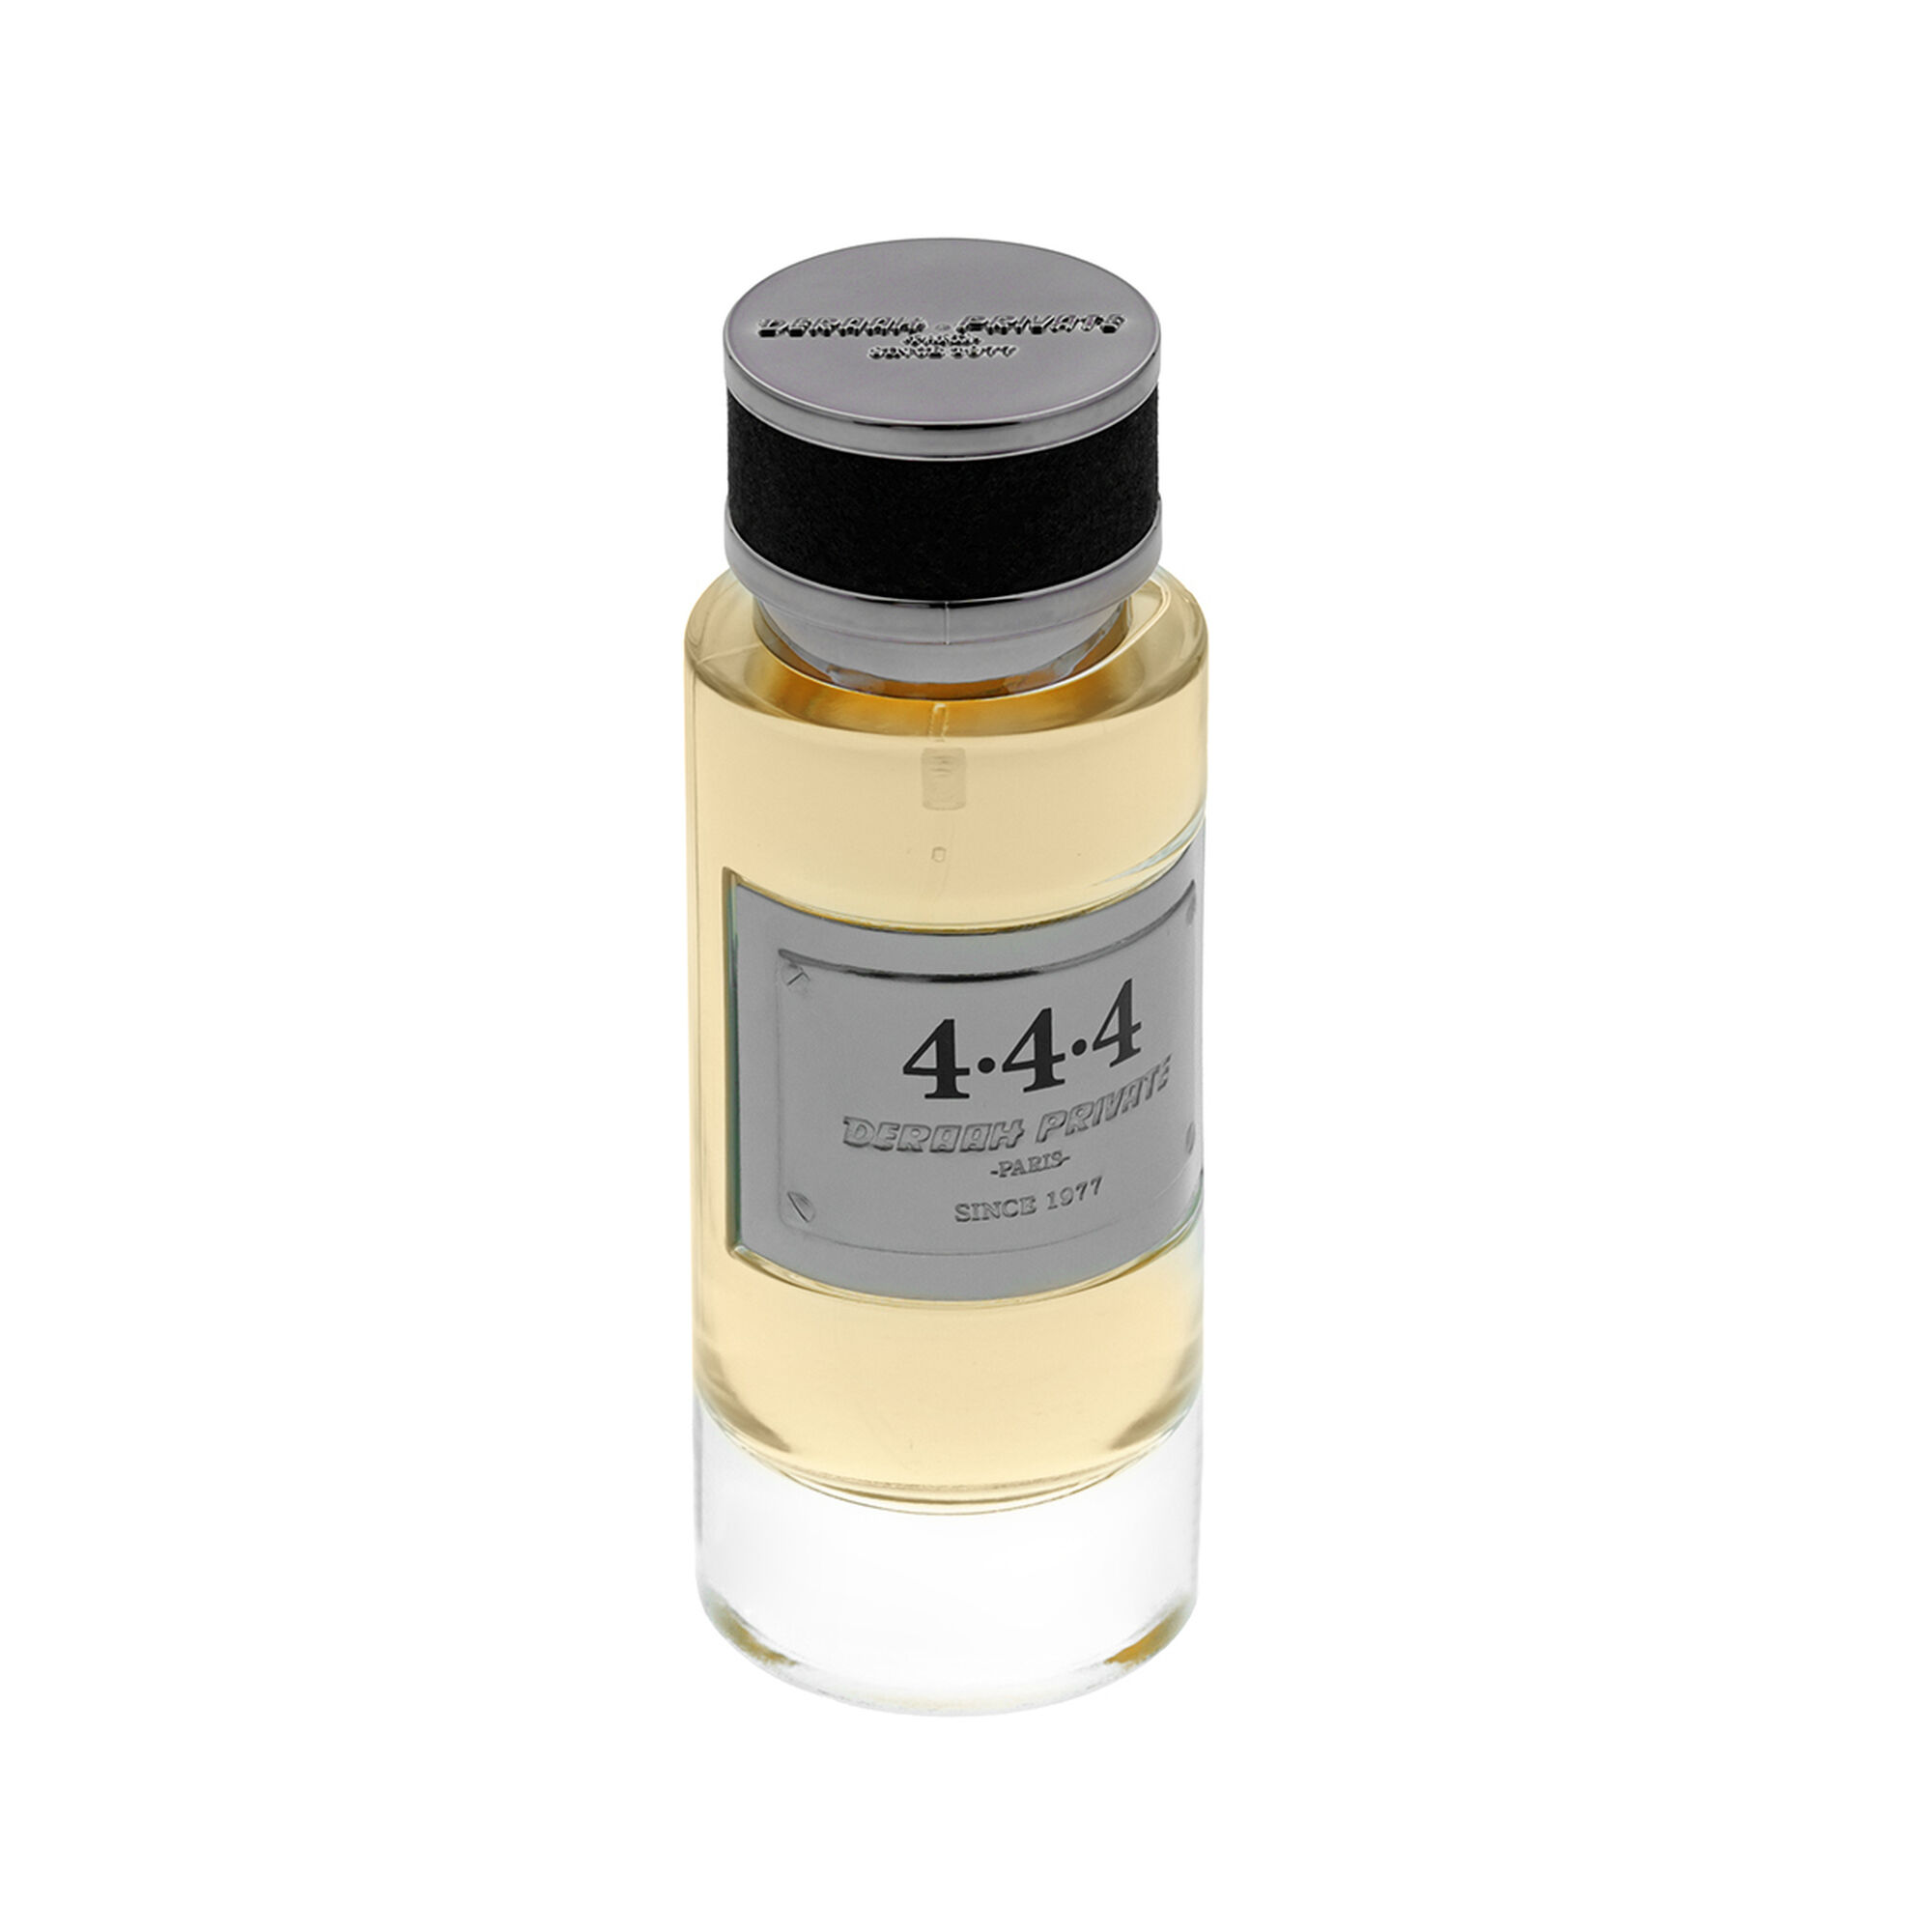 Deraah Private 444 perfume